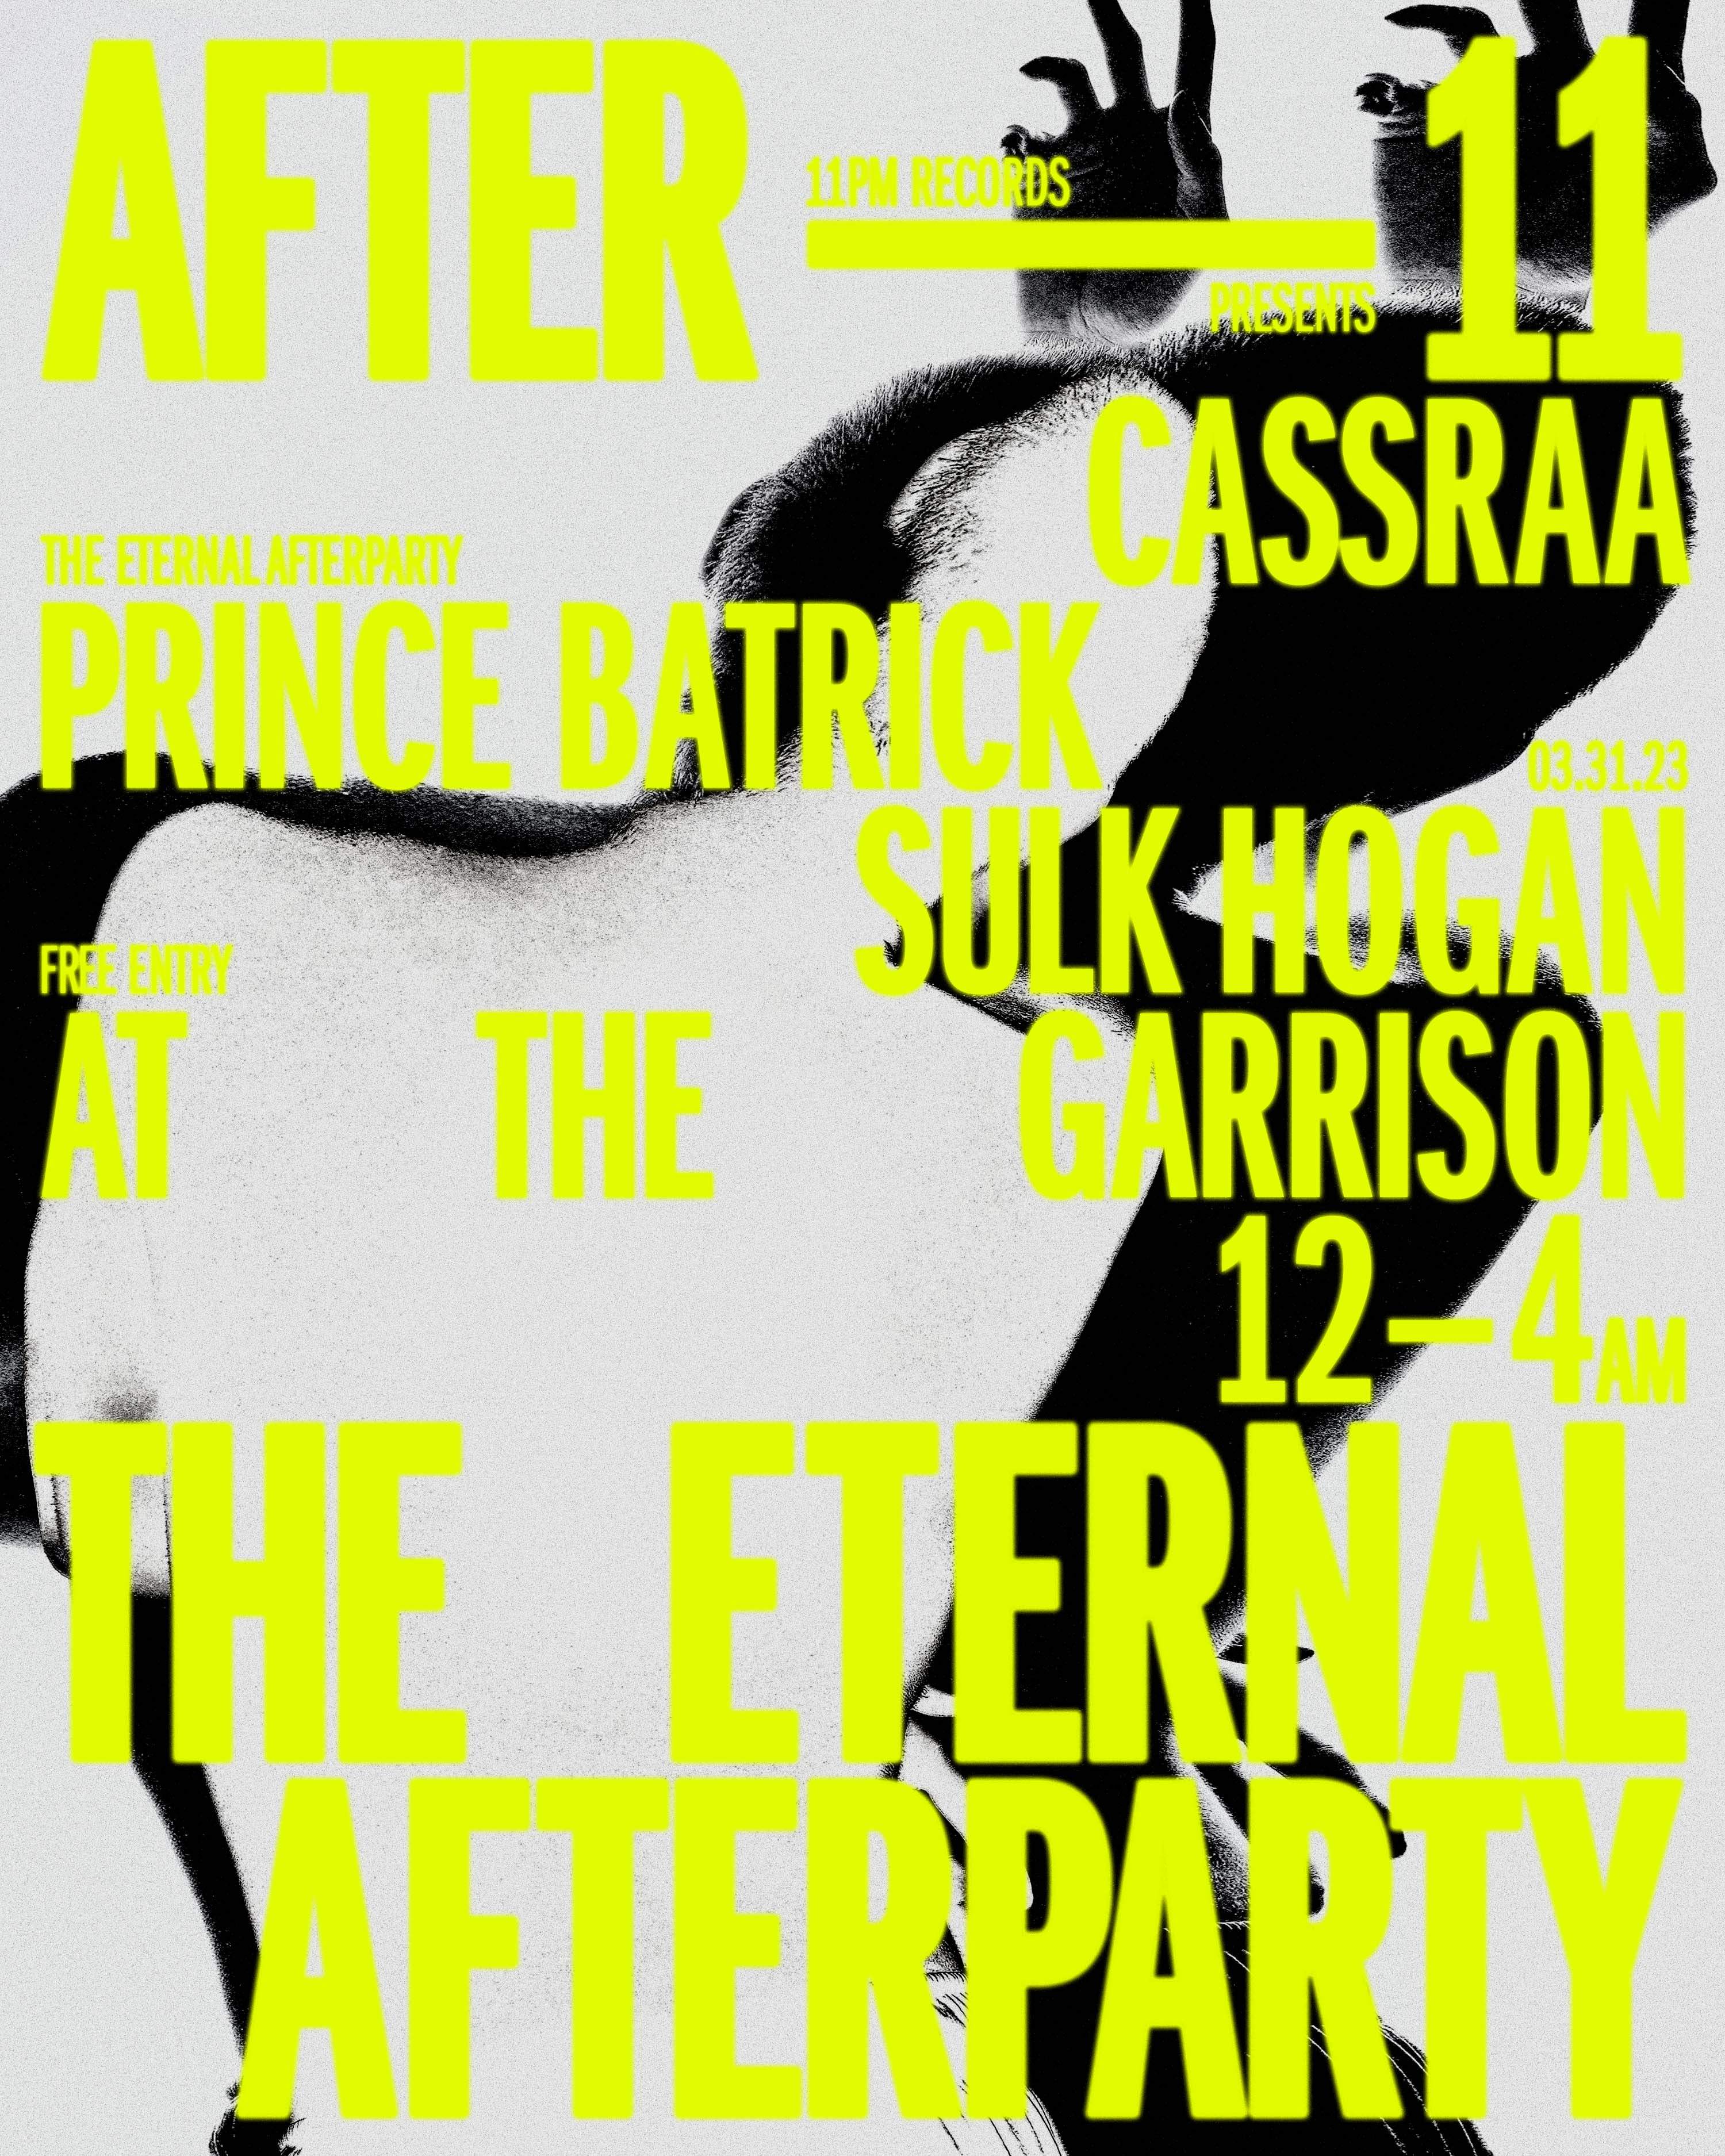 11 PM Eternal Afterparty with CASSRAA, Prince Batrick, Sulk Hogan - Página frontal